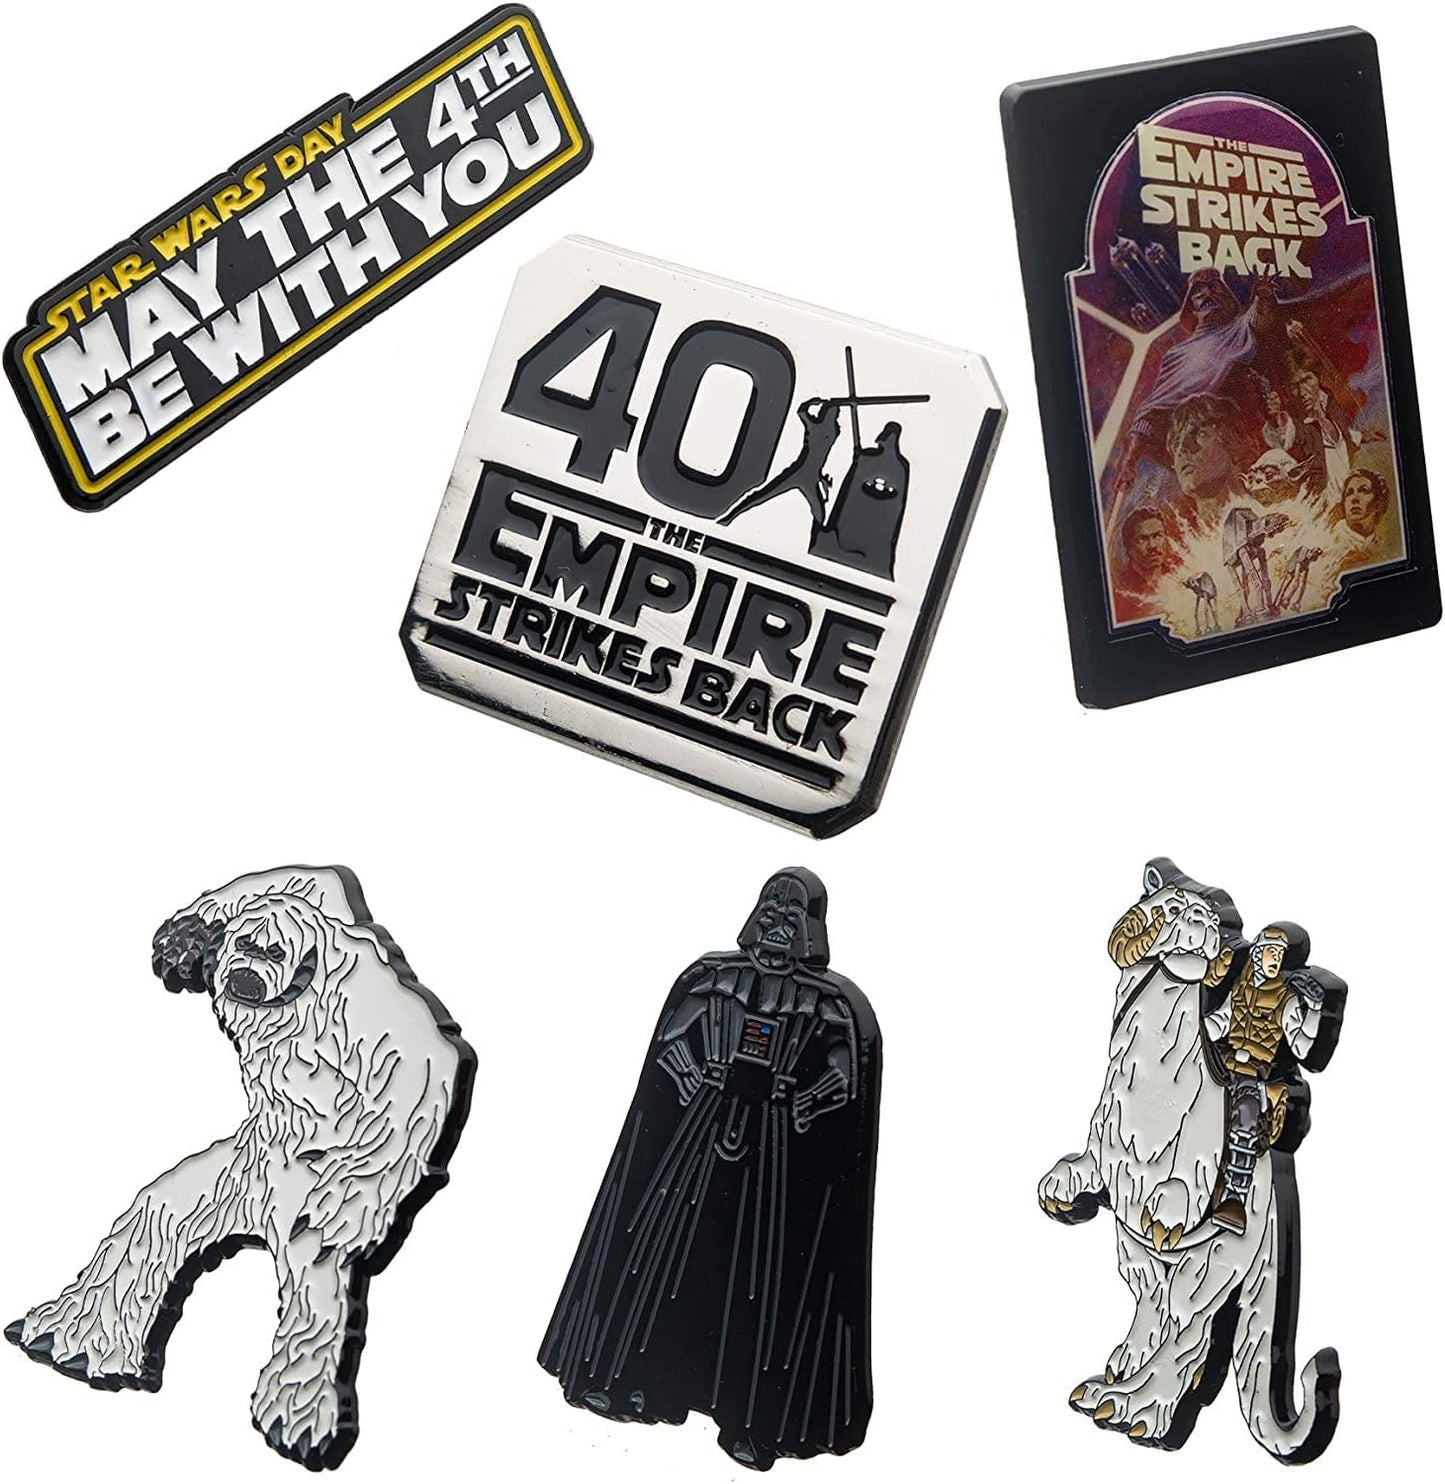 Star Wars: Empire Strikes Back 40th Anniversary Limited Edition Set of 6 Enamel Pins